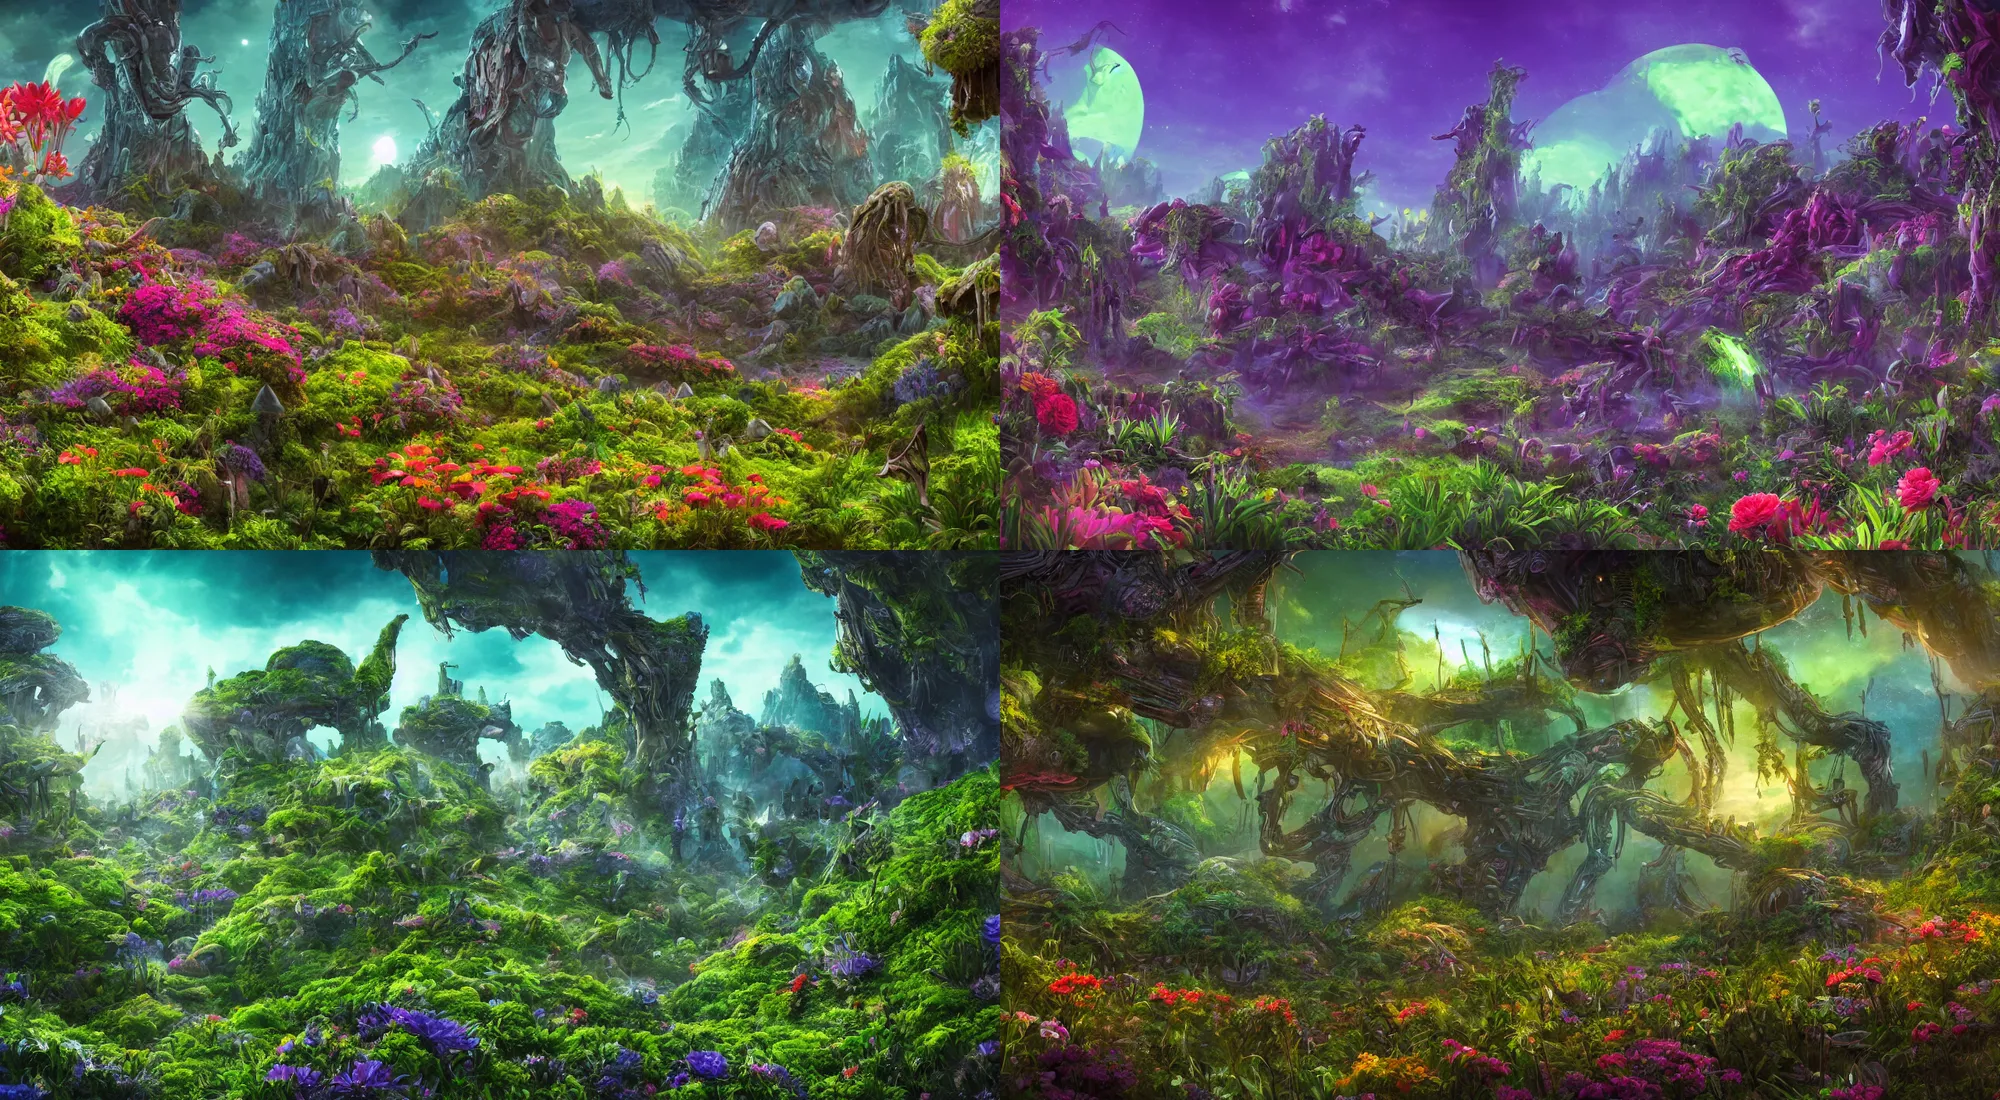 Prompt: alien landscape in disney style , lots of flowers and vegetation, cinematic lighting